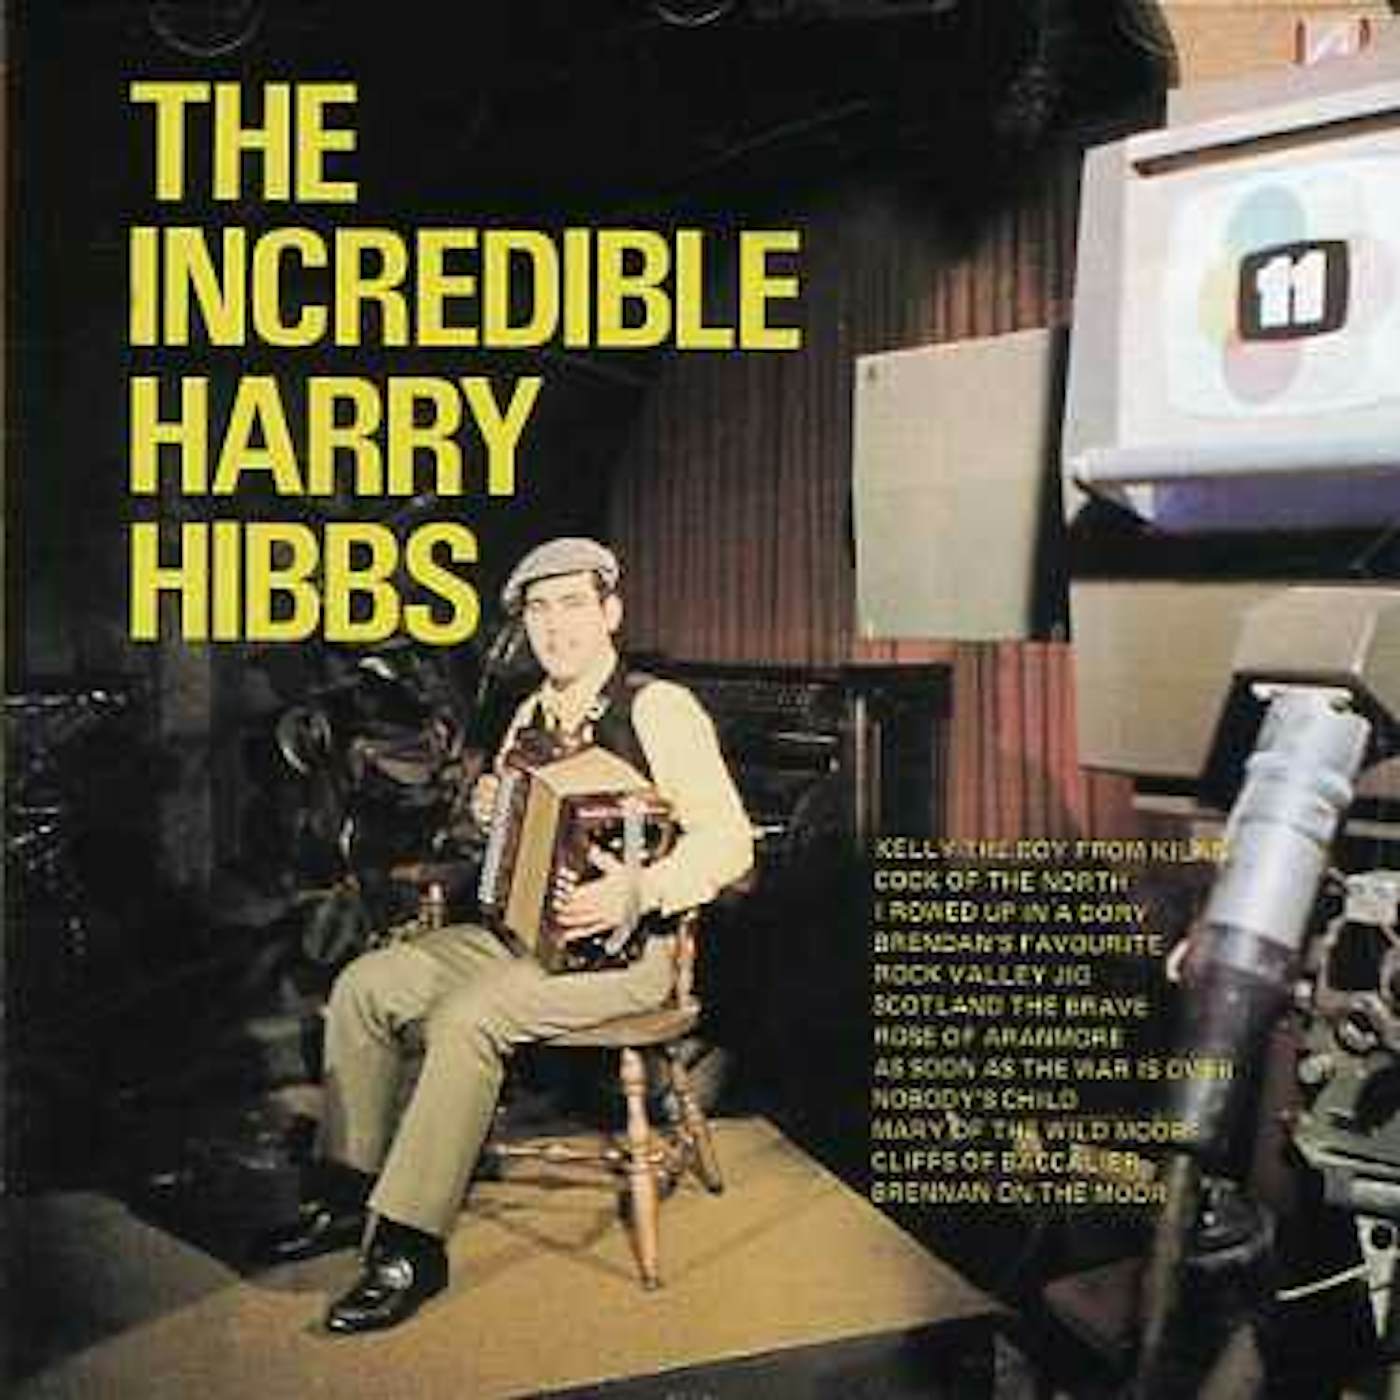 Harry Hibbs INCREDIBLE CD